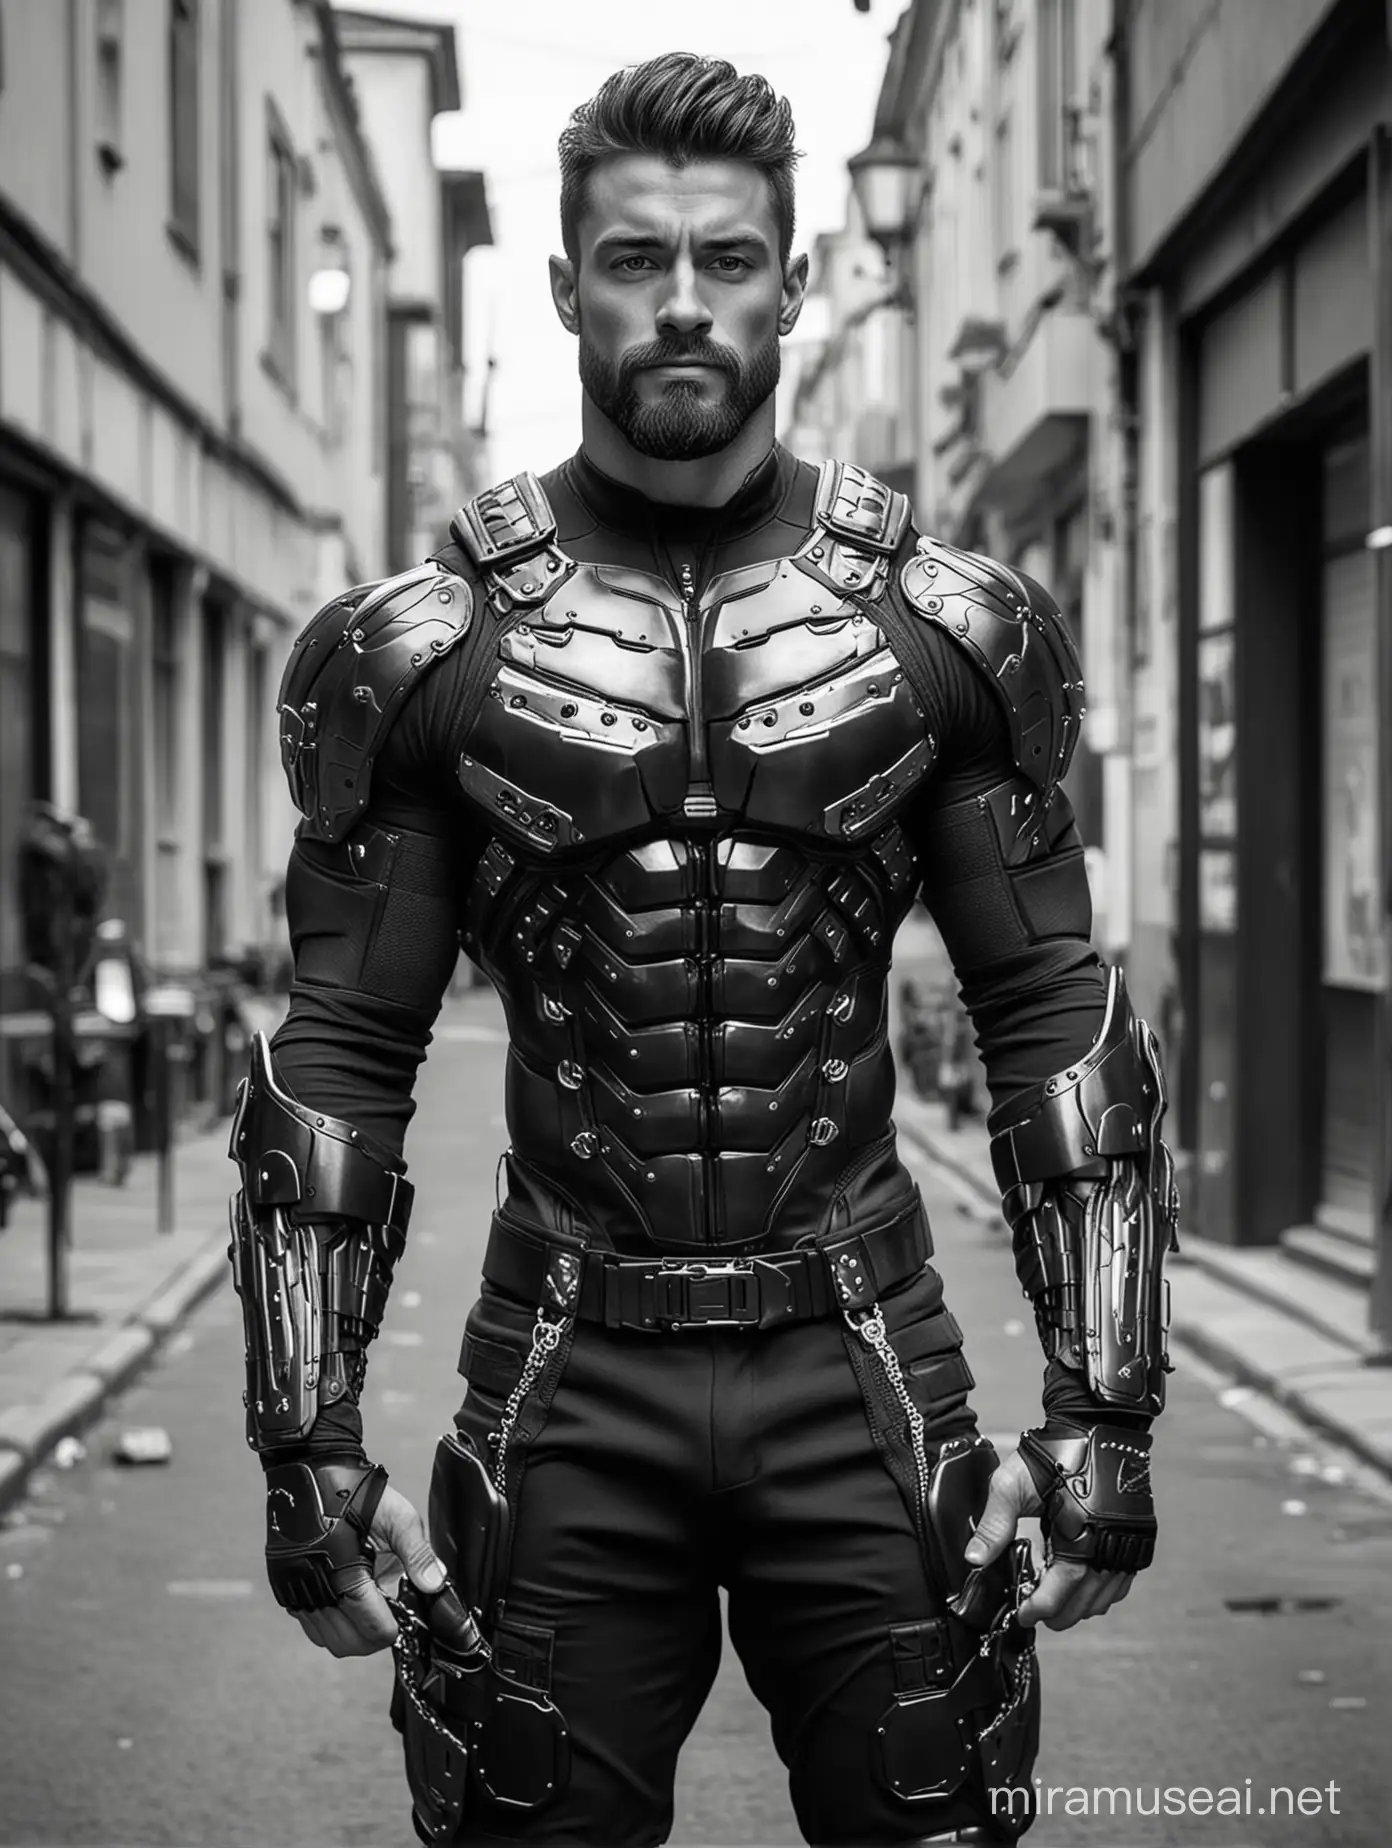 Stylish Bodybuilder Men in Futuristic Armor Strolling Through Urban Setting